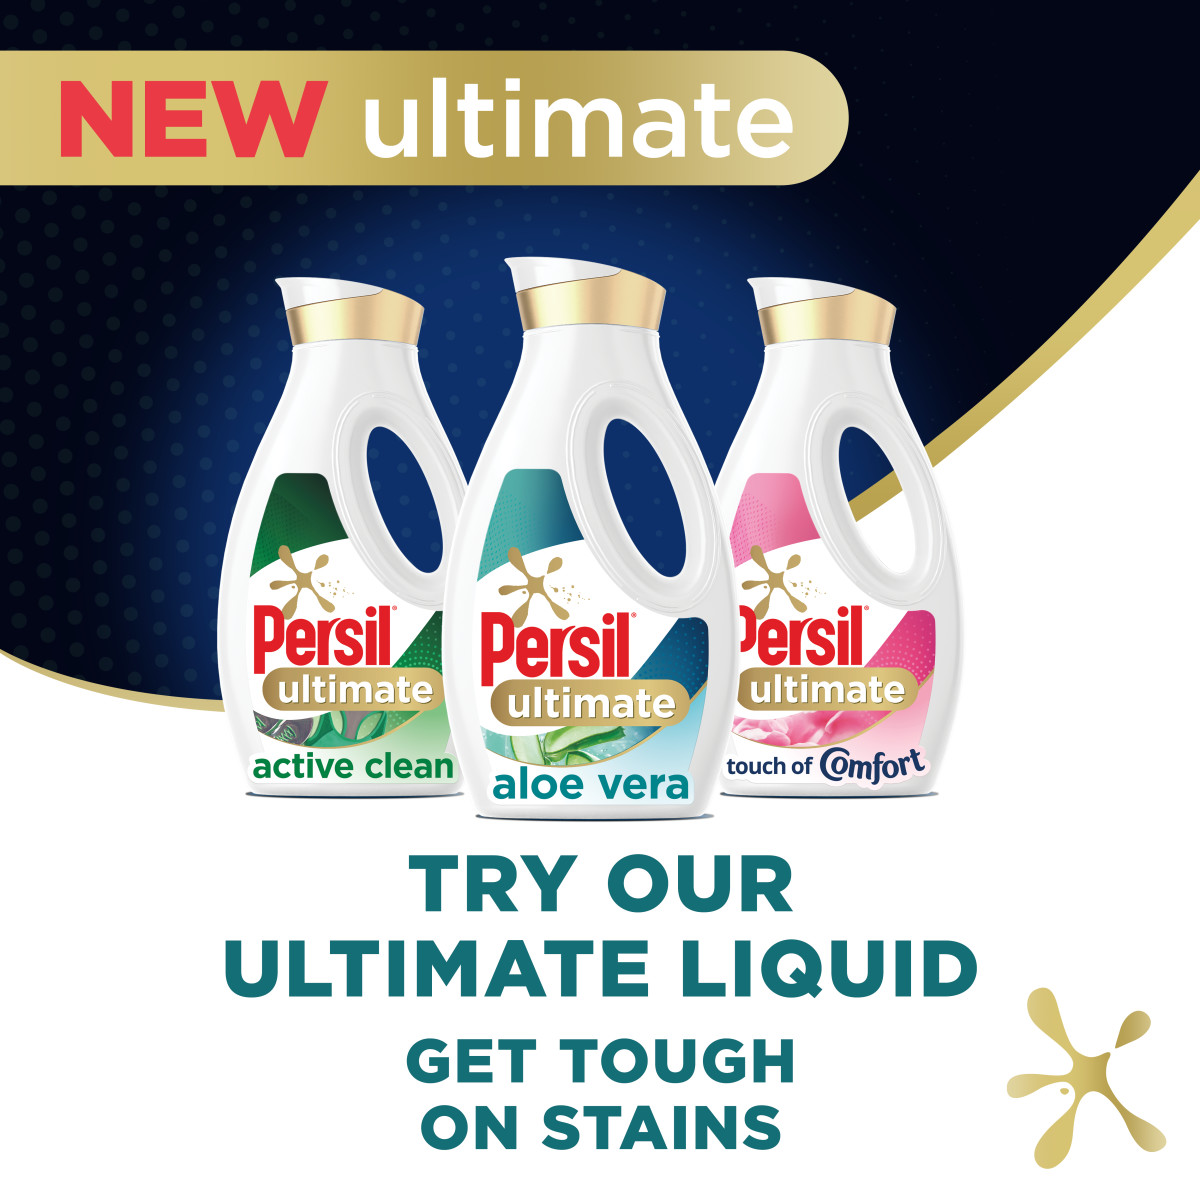 Persil Ultimate Liquid Range